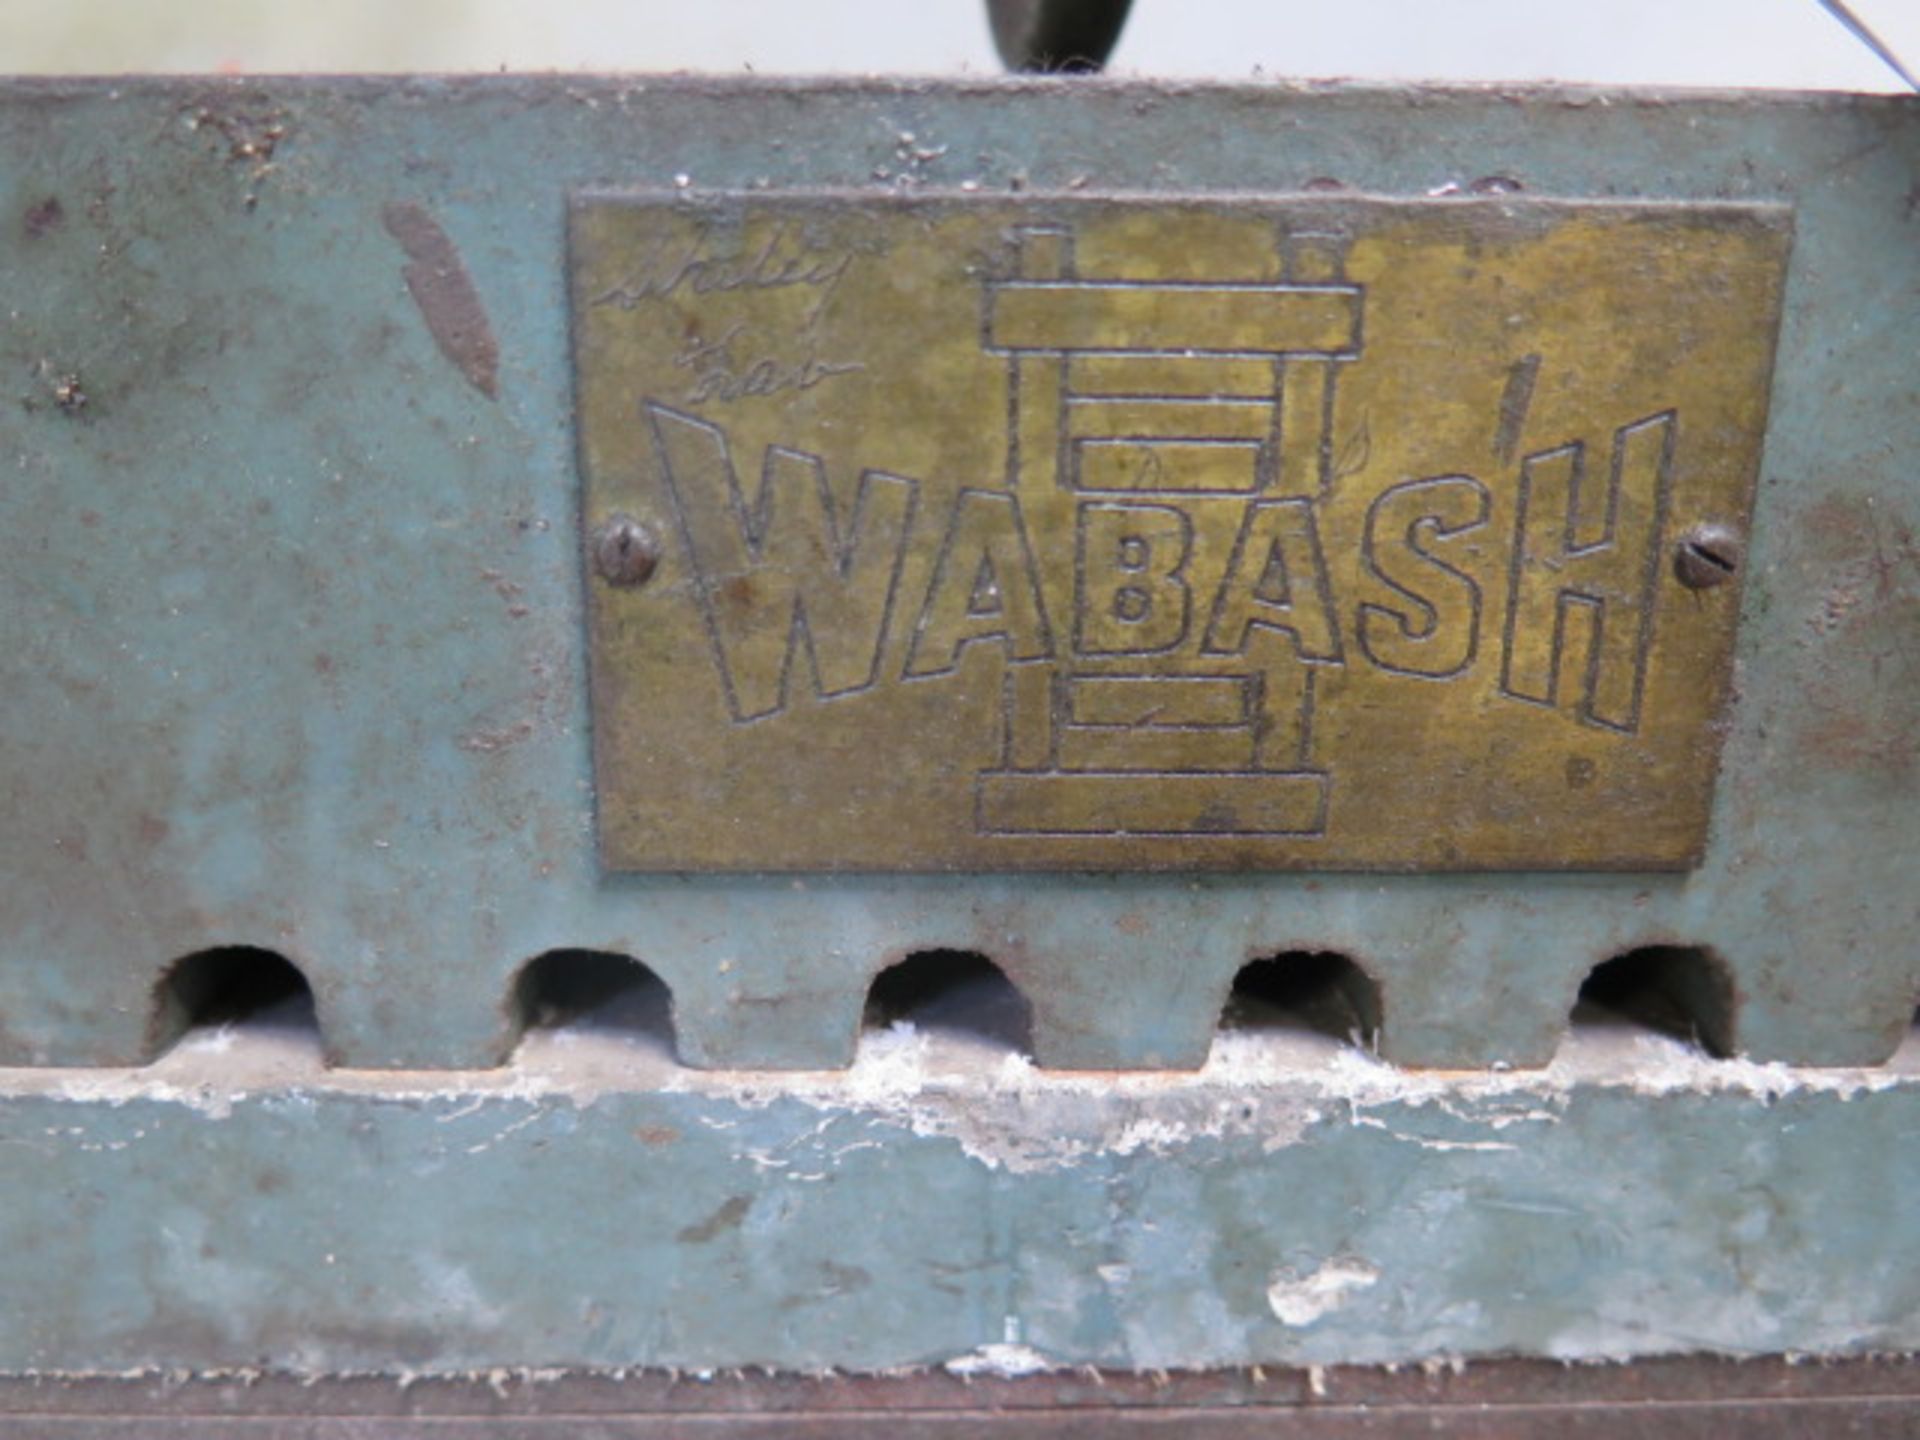 FMC / Wabash mdl. 12-102T 12-Ton 7” x 10” Hydraulic Heated Platen Press s/n 3523 w/ 2000 Watt - Image 6 of 6